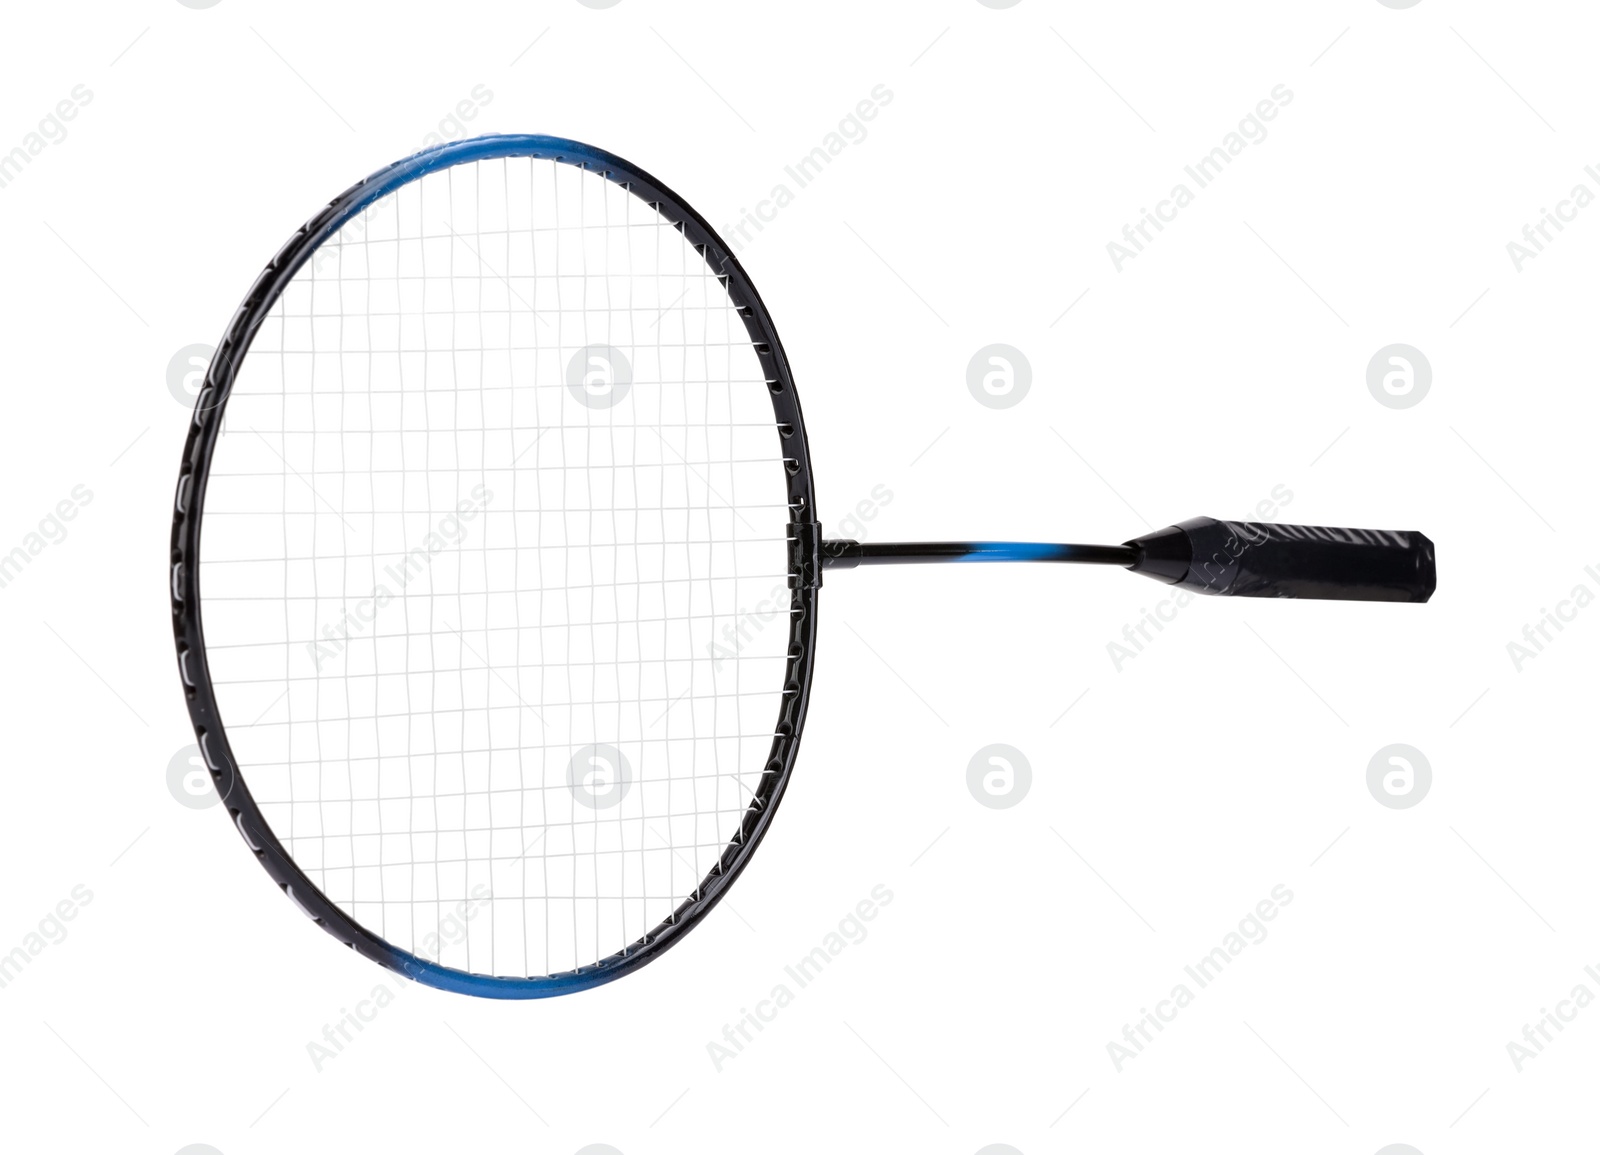 Photo of Badminton racket isolated on white. Sports equipment